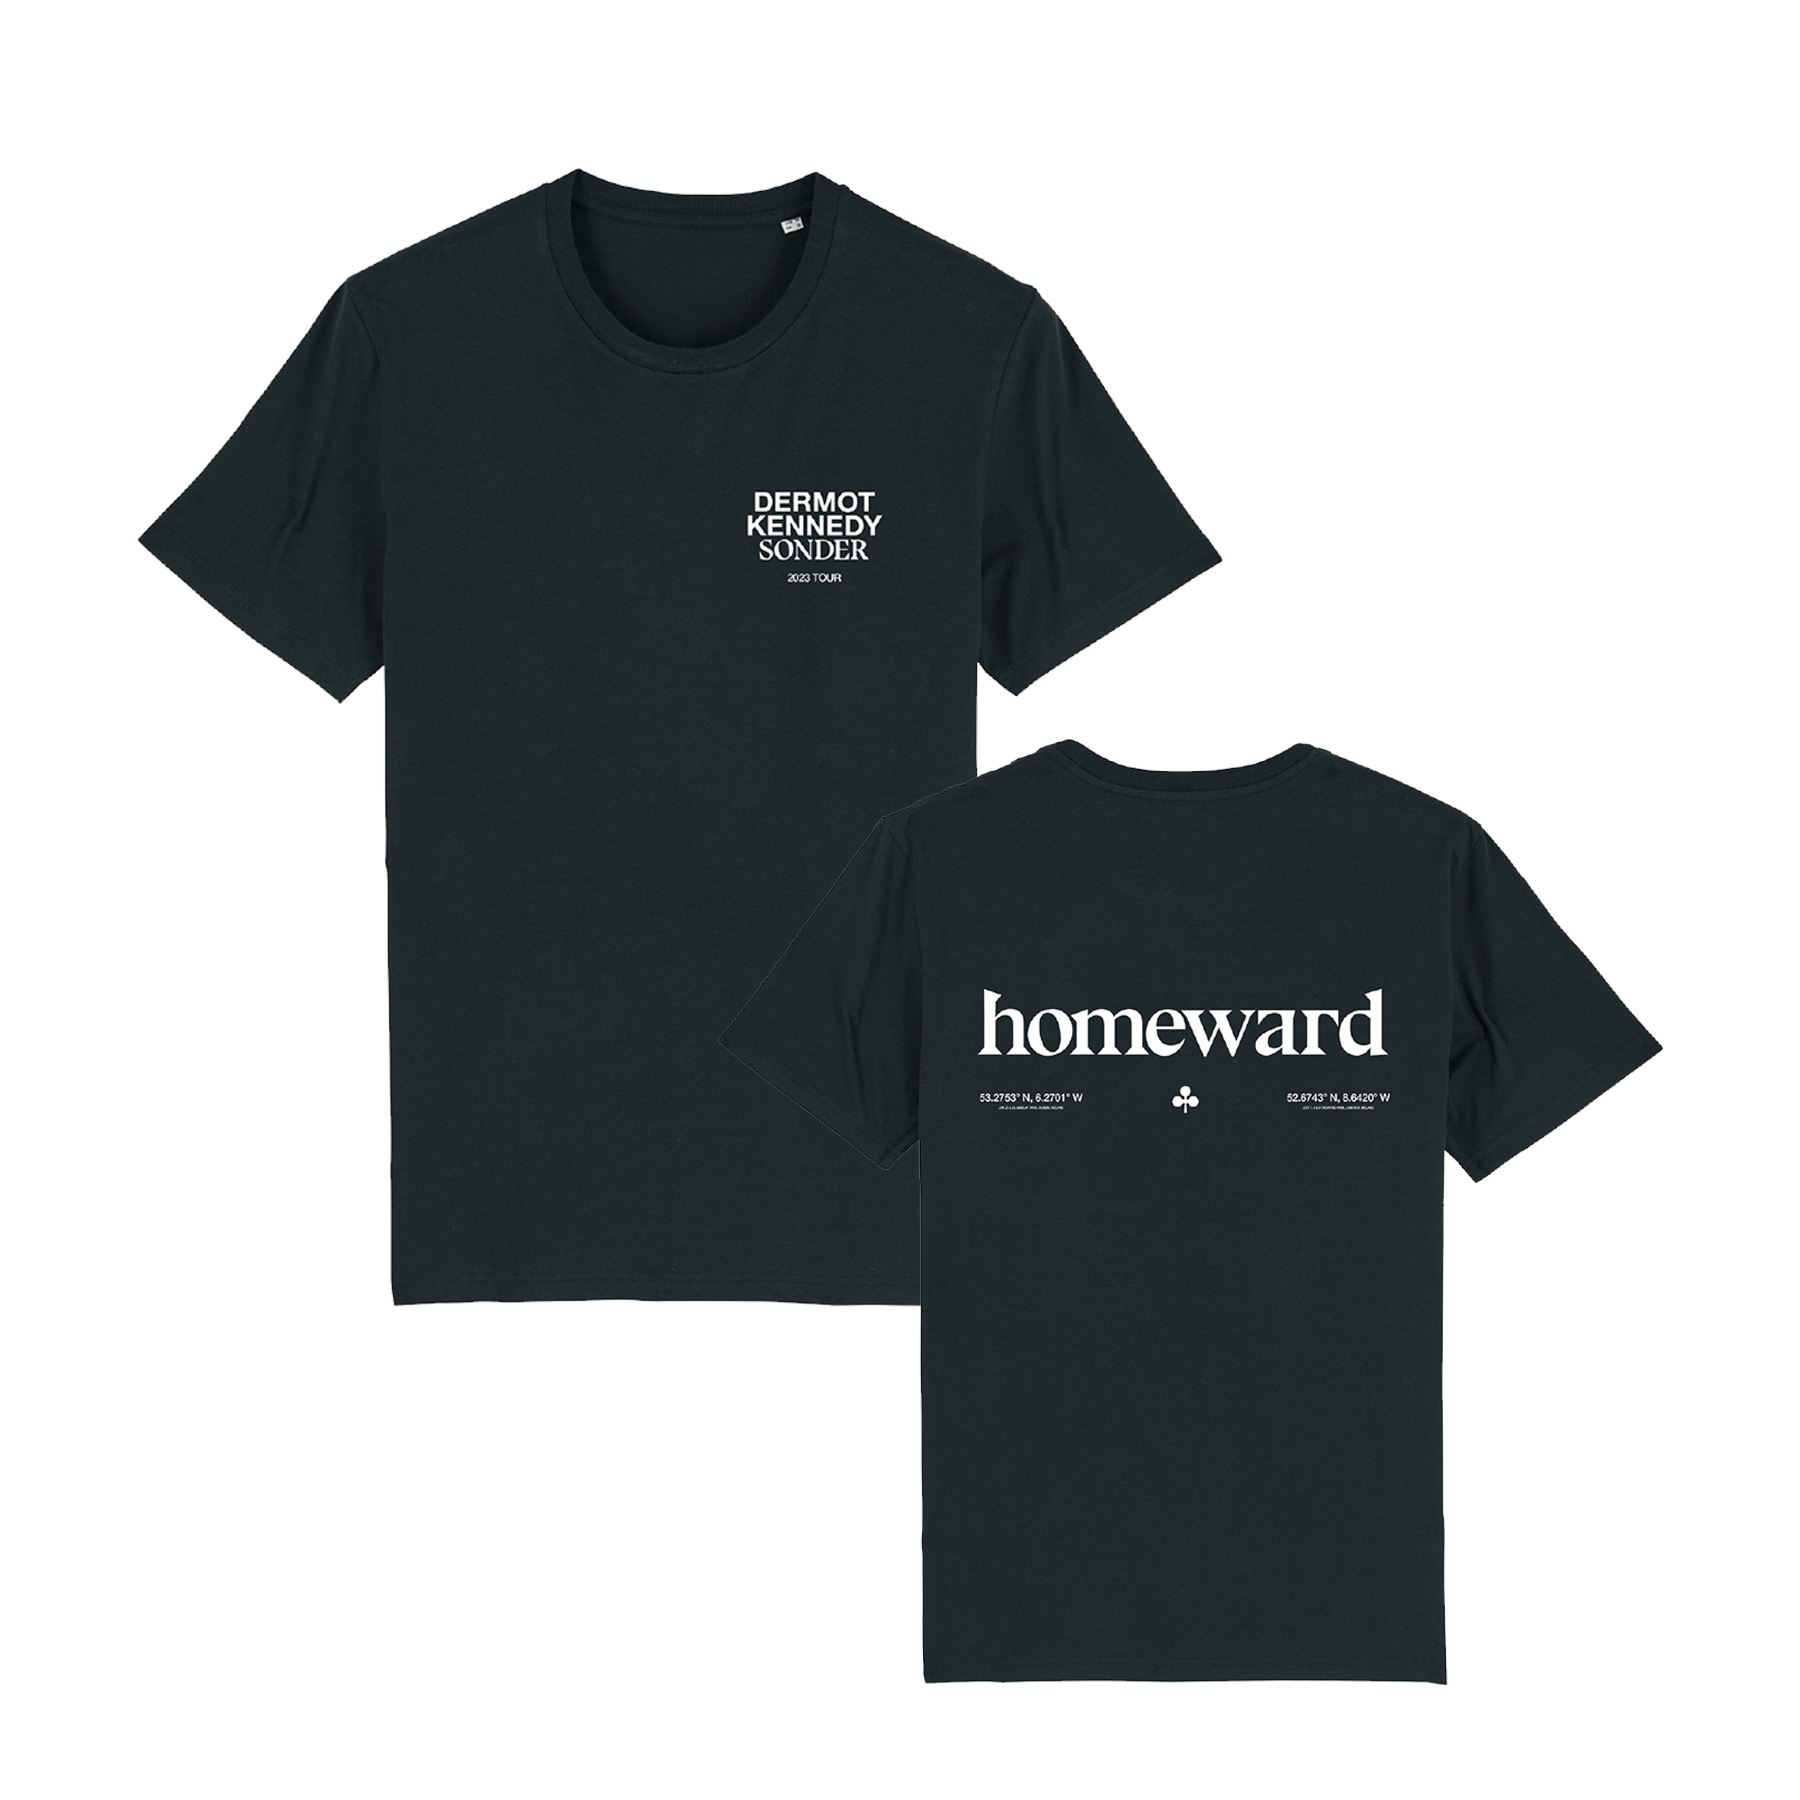 Dermot Kennedy - Sonder Tour: Homeward Black T-shirt